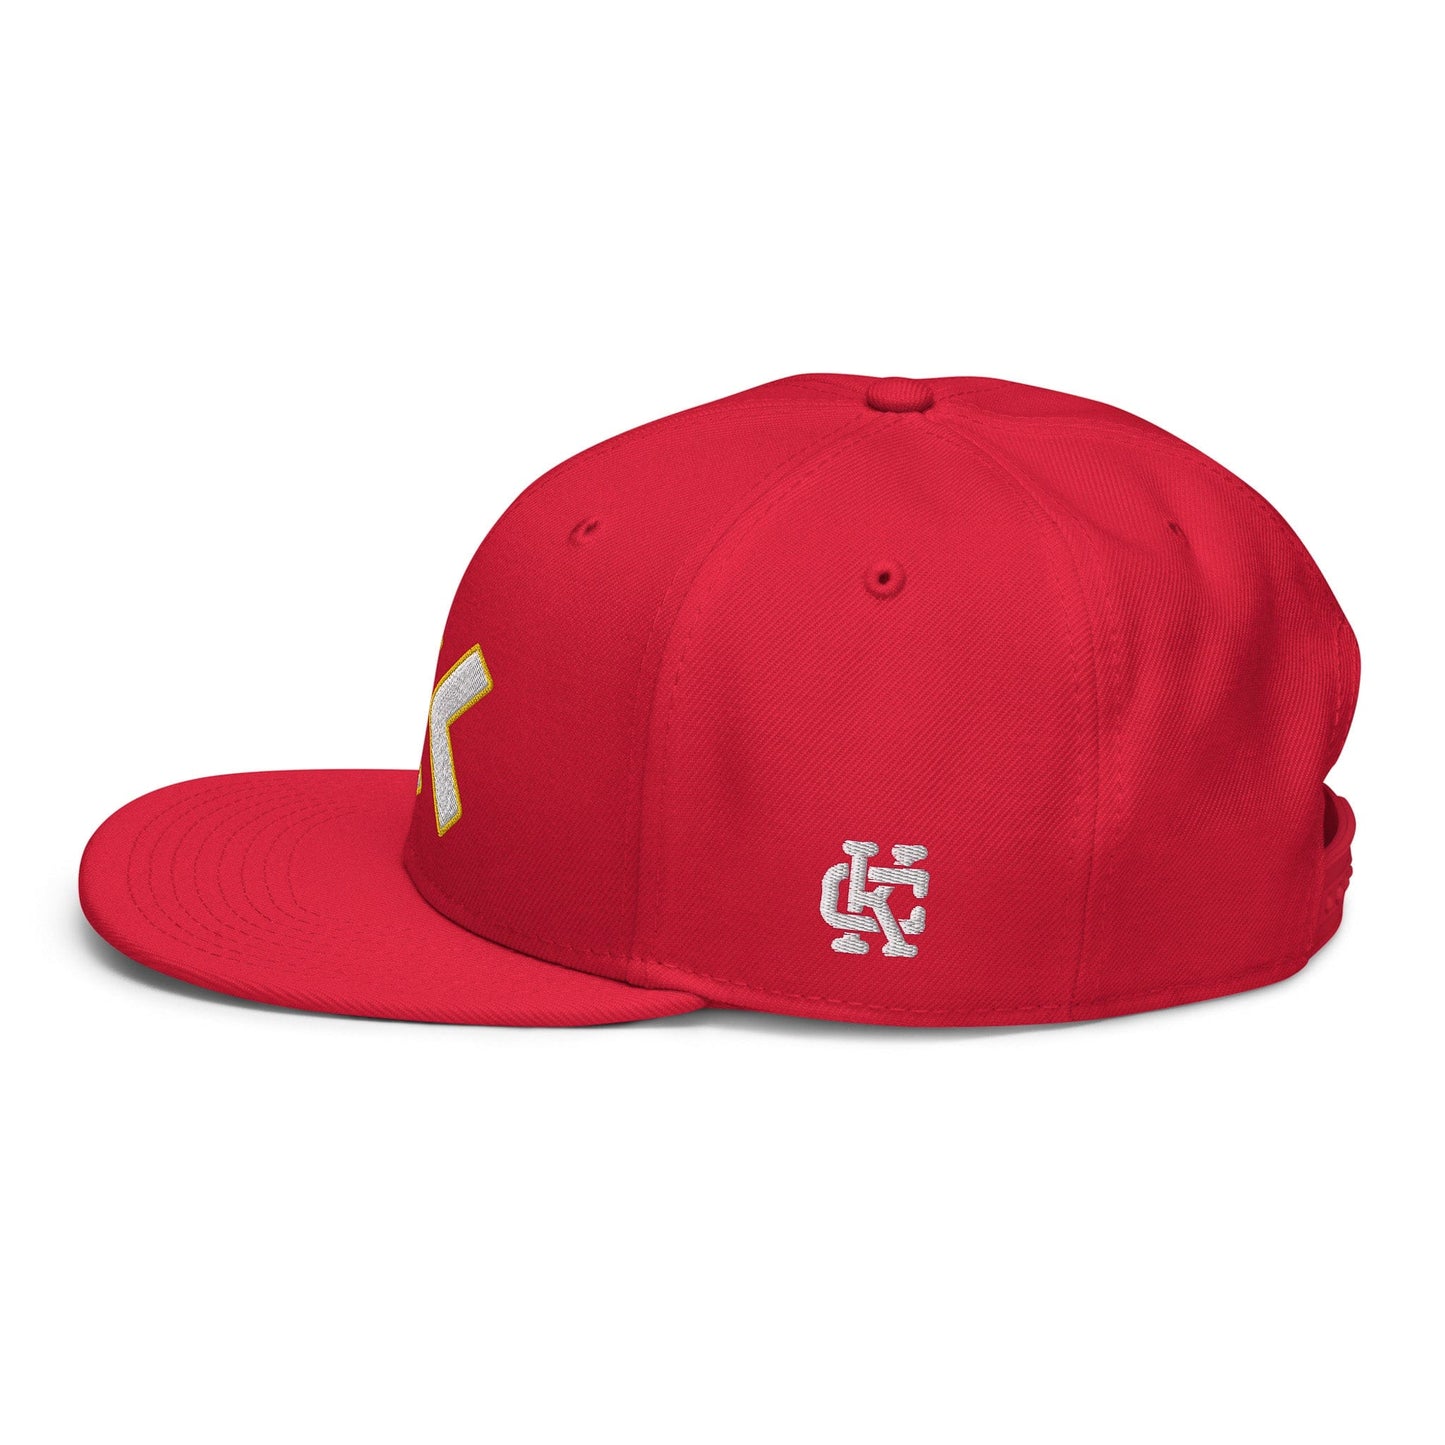 KC SWag Kansas City Chiefs red Greek KC Flat Snapback hat